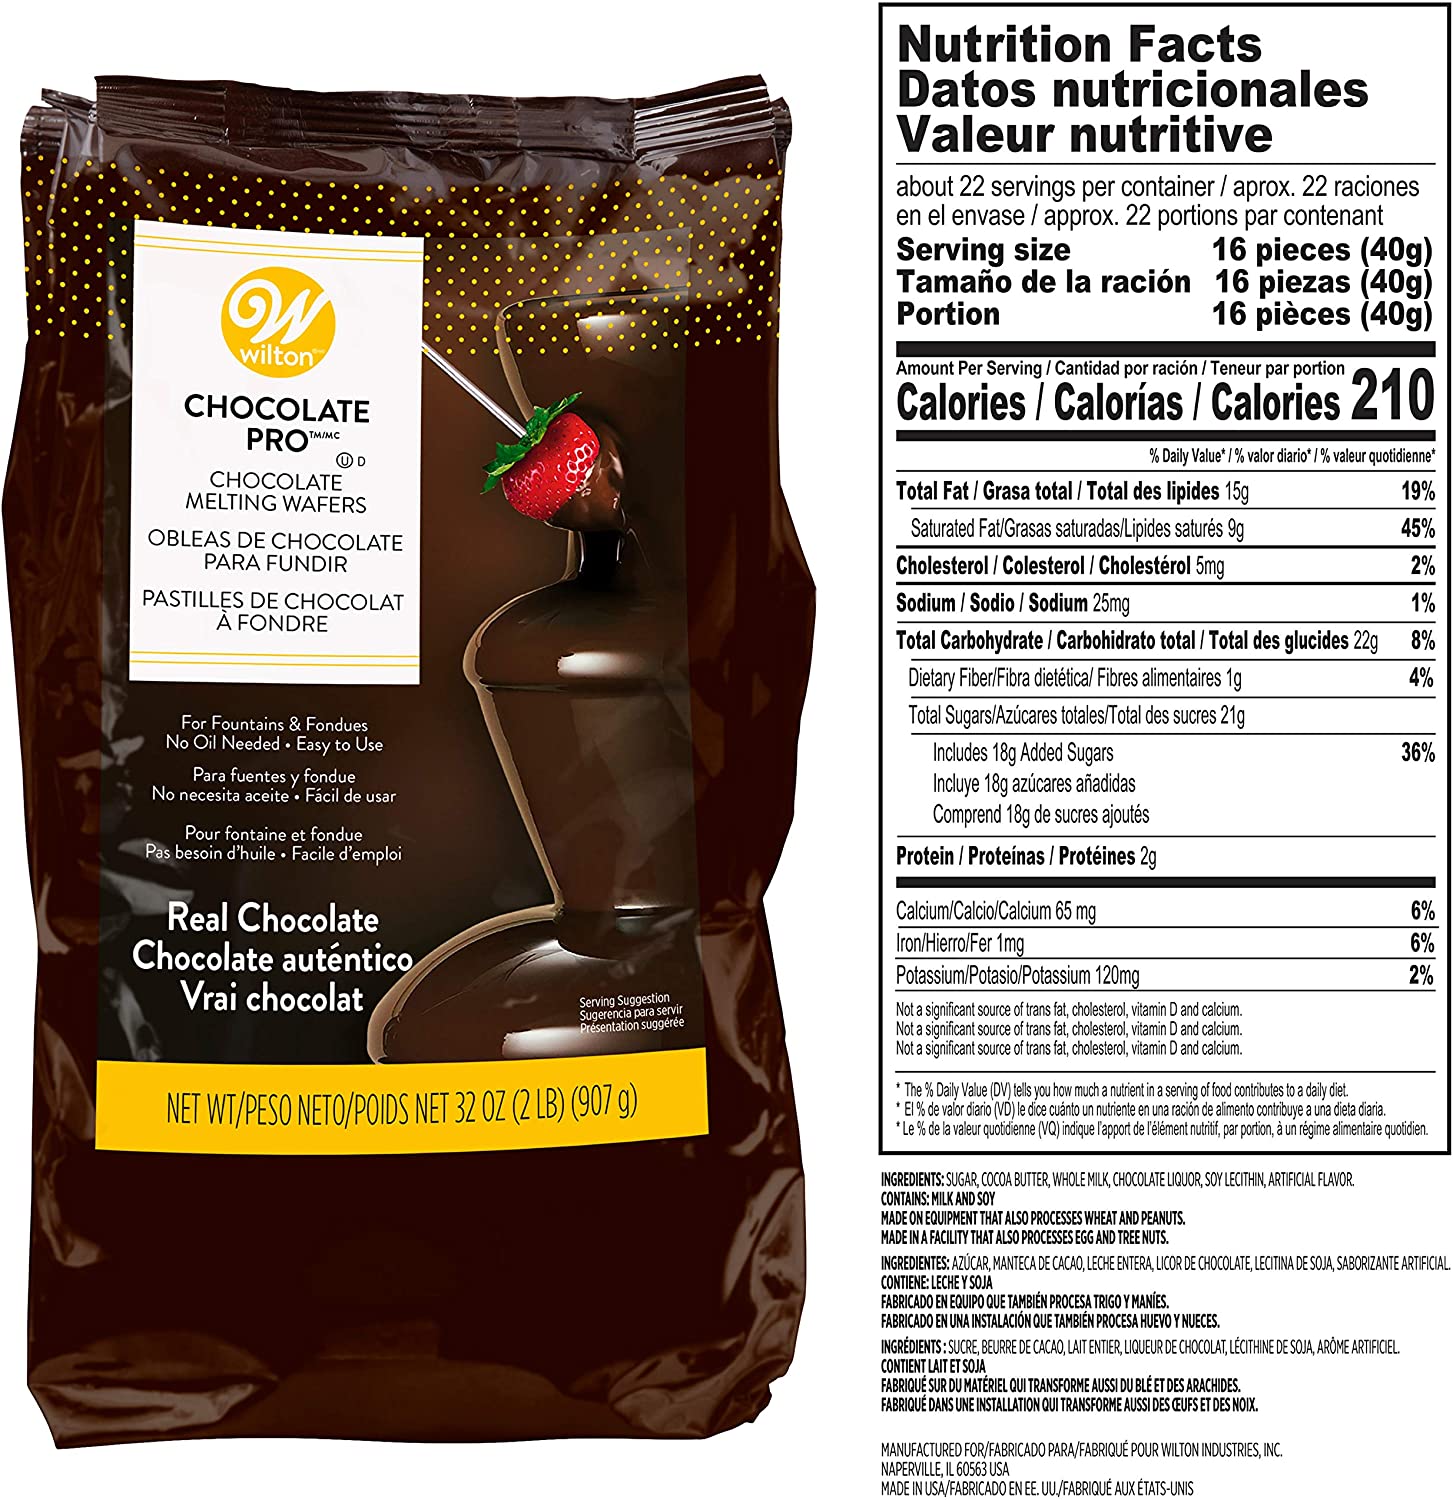 Wilton Dark Chocolate Drops for Chocolate Fountains or Fondue Chocolate, 32 oz. (2 lbs) - image 3 of 7